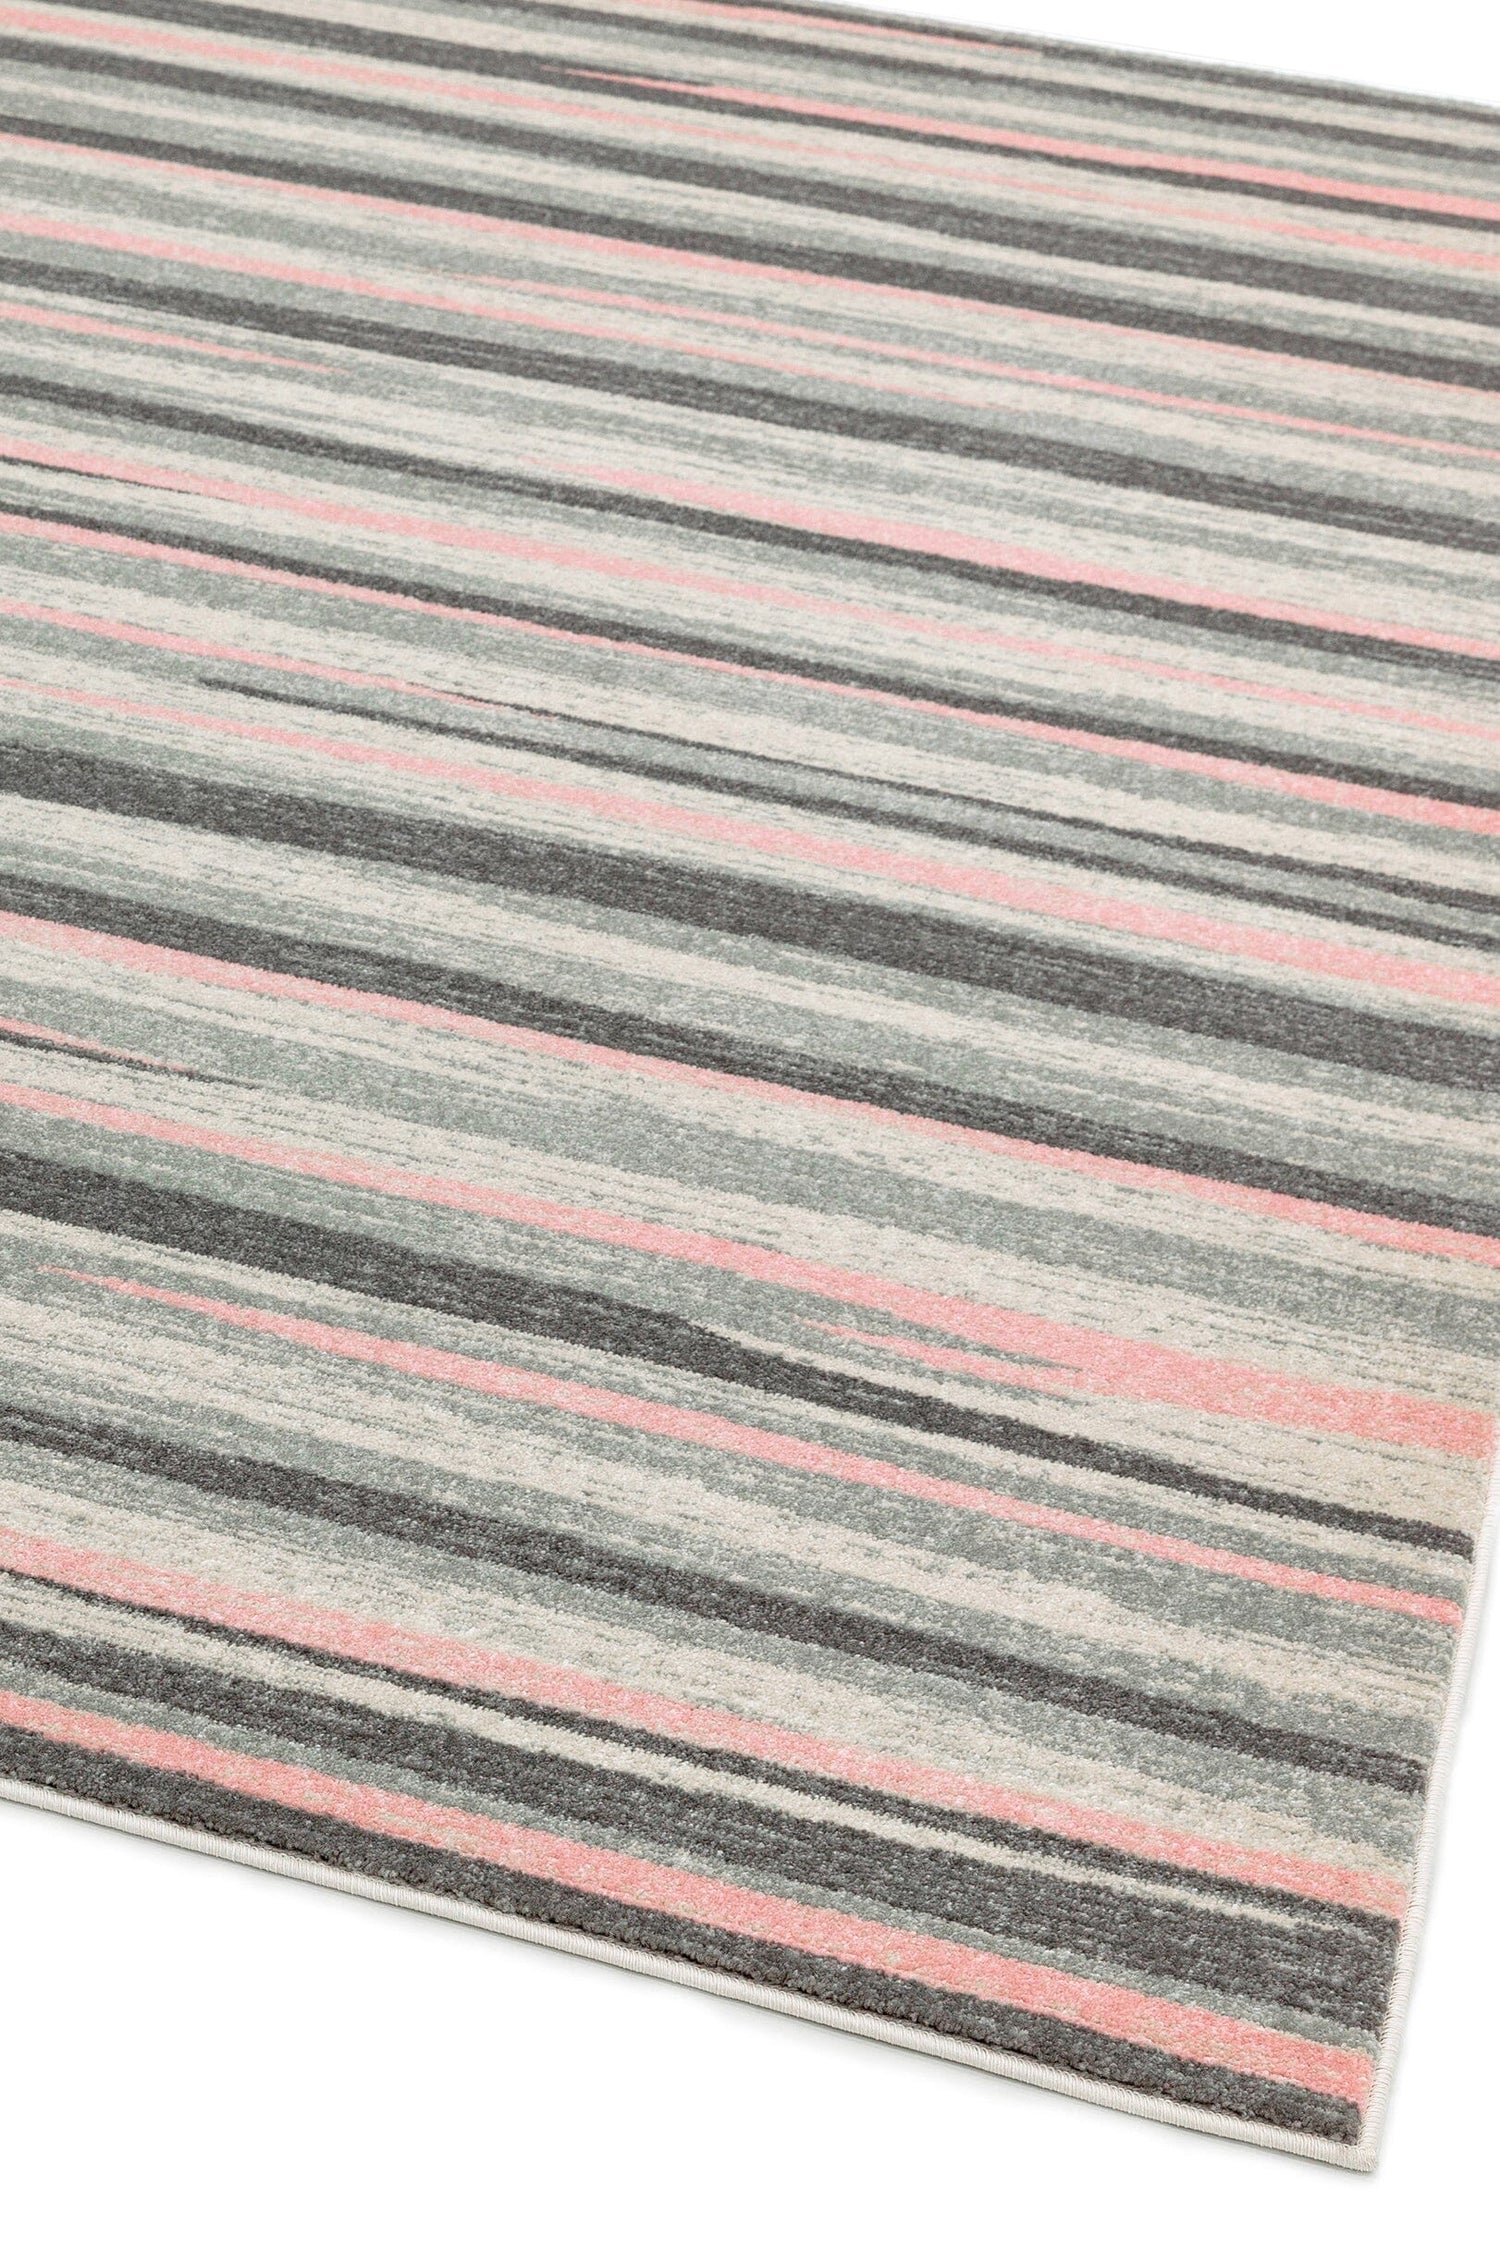  Asiatic Carpets-Asiatic Carpets Colt Machine Woven Rug Stripe Pink - 120 x 170cm-Multicoloured 565 